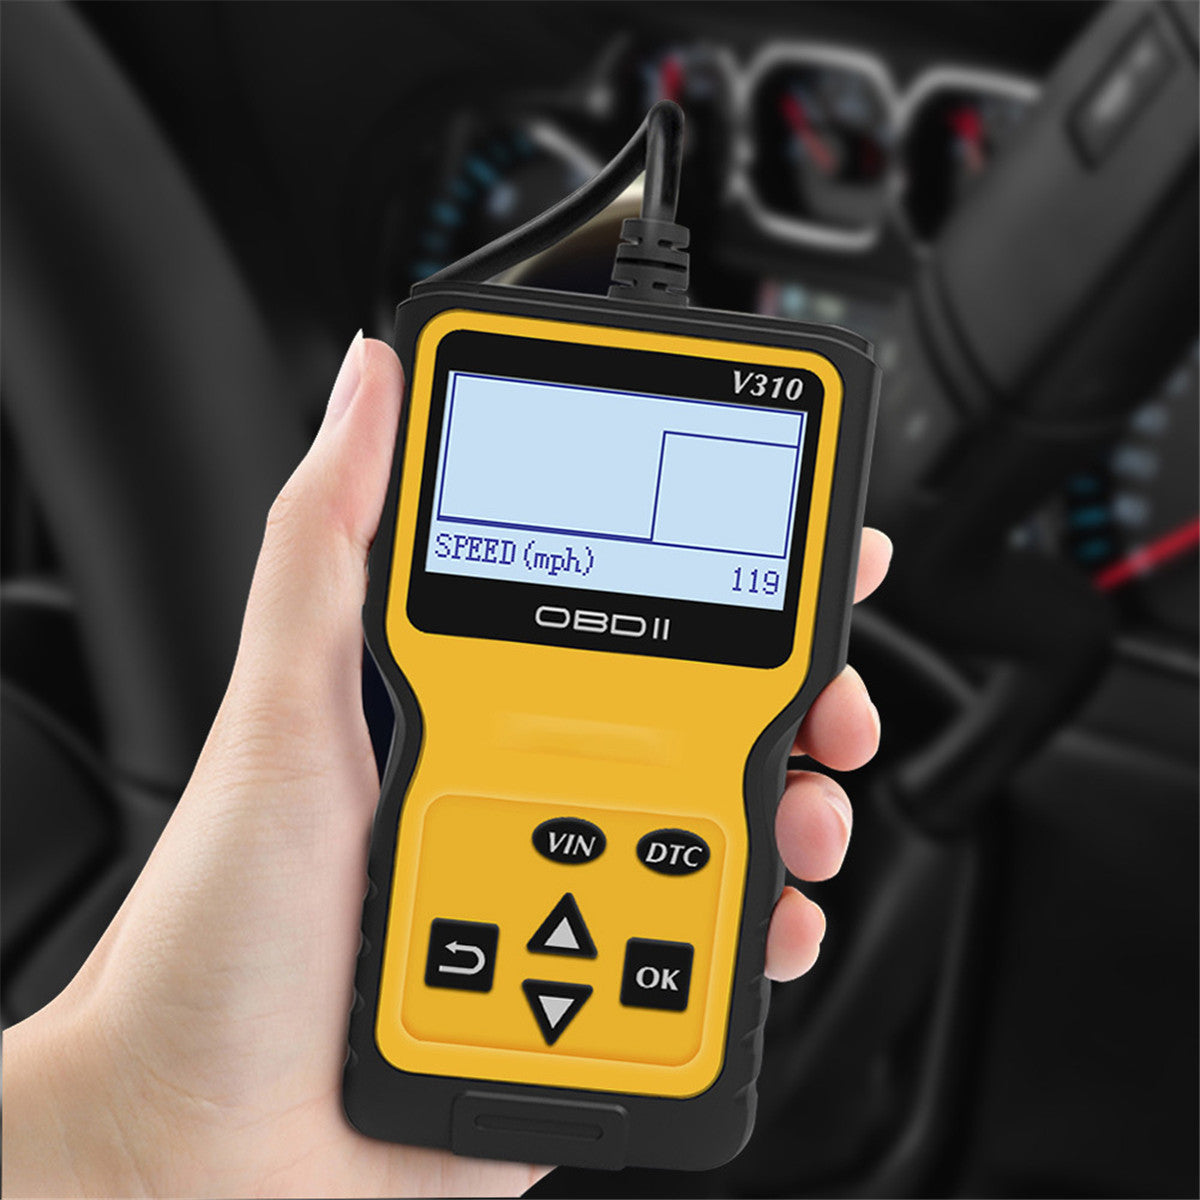 V310 Car OBD2 Diagnostic Tool Automobile Scanner Engine Fault Code Reader Detector With LCD Display - Auto GoShop